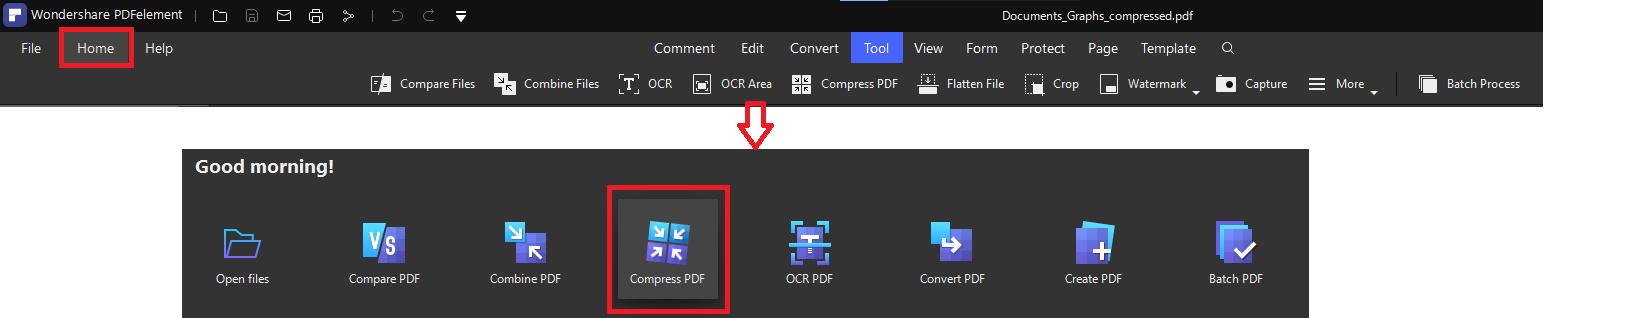 1a opzione per comprimere file PDF